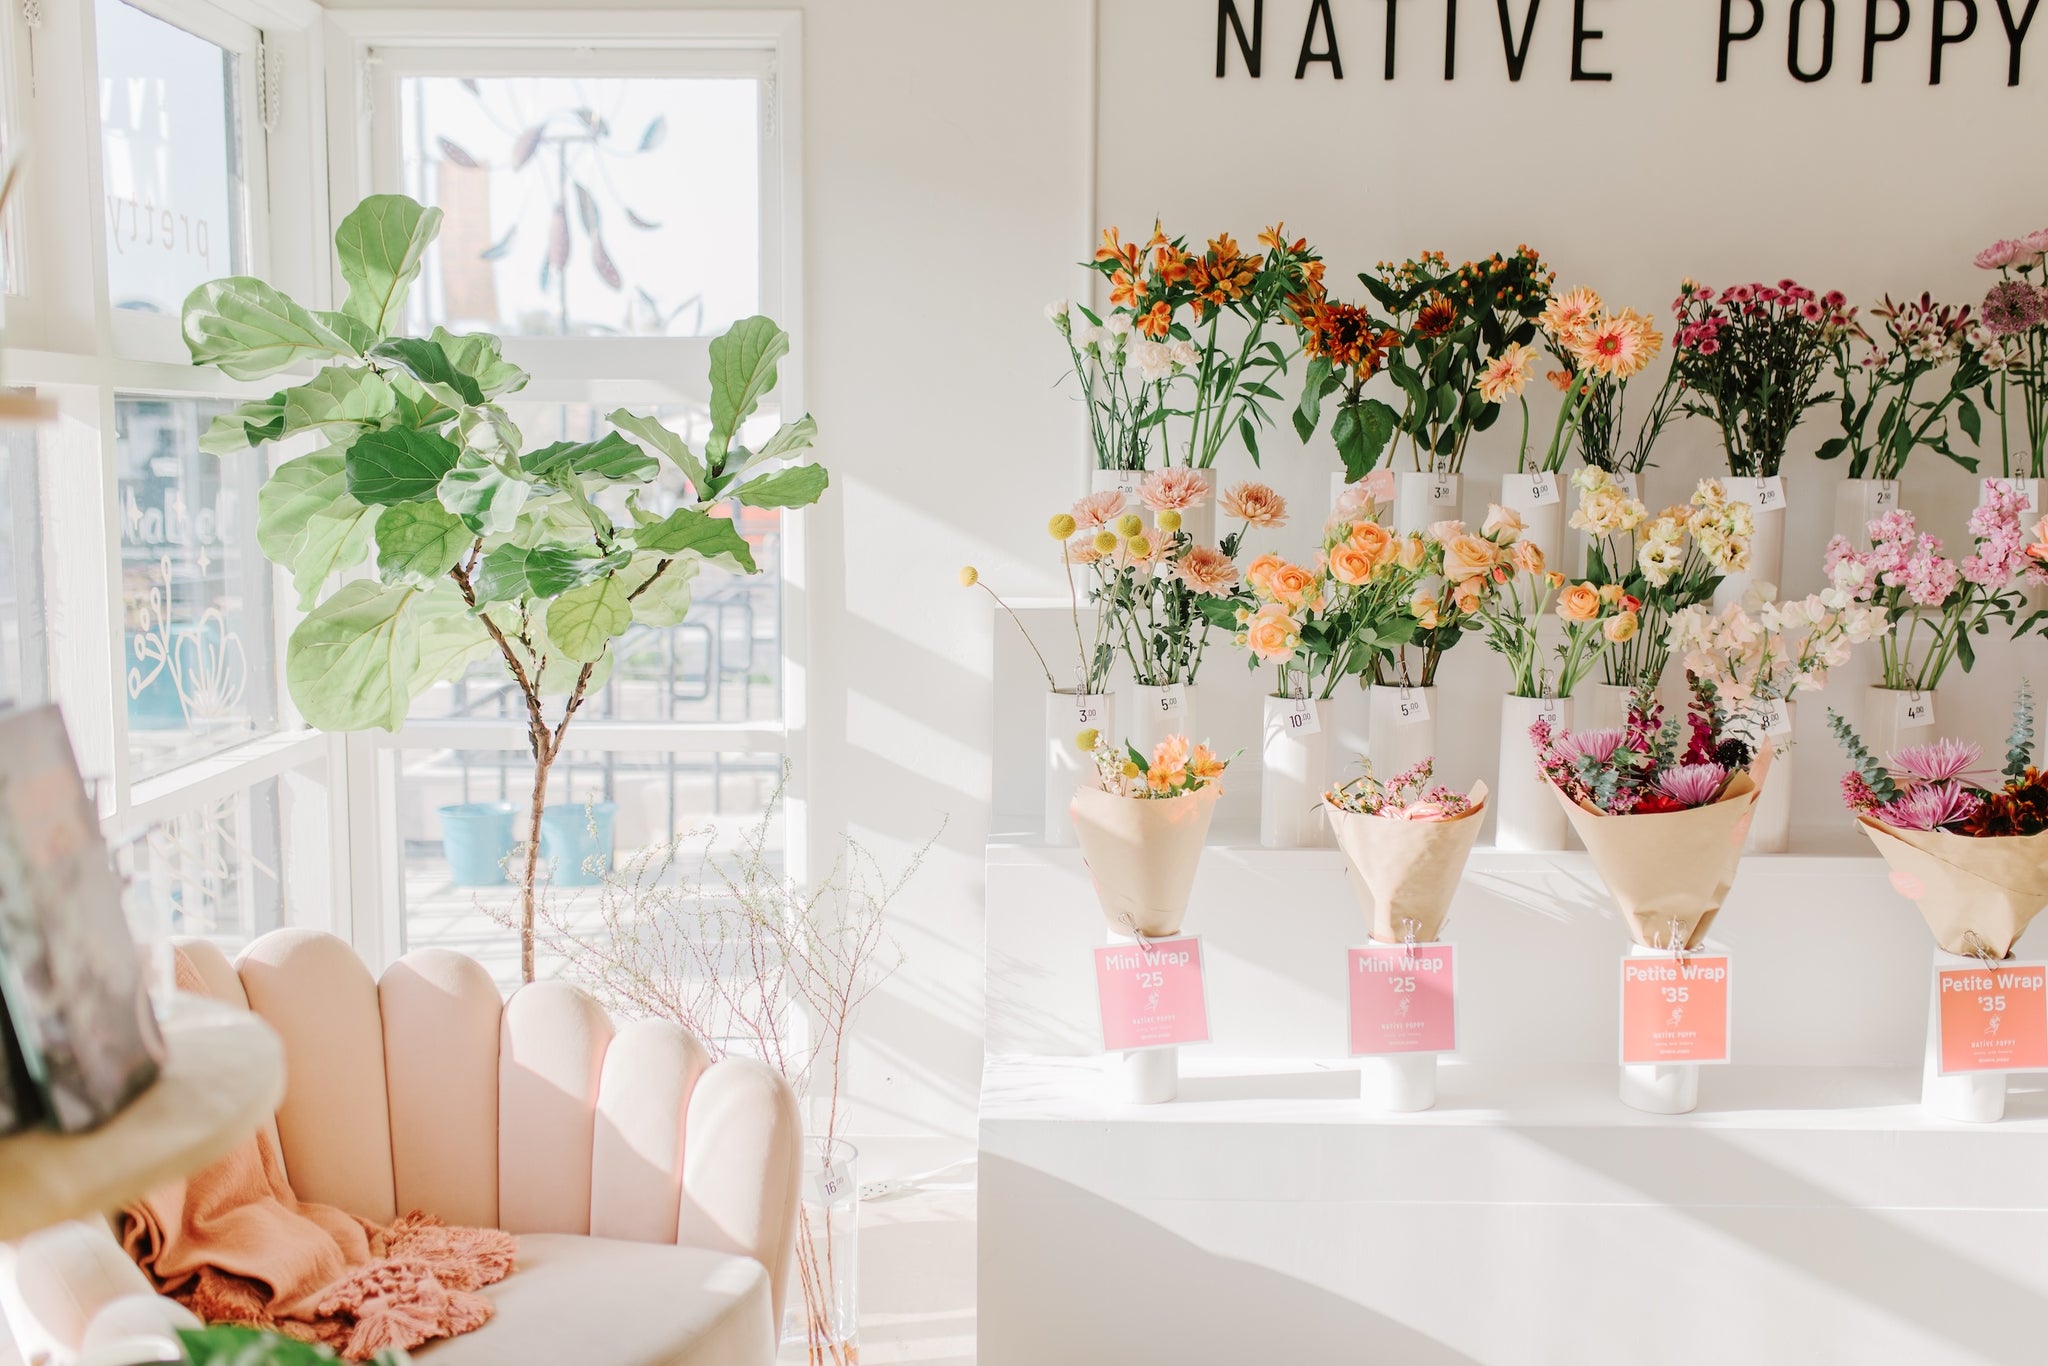 Native Poppy’s flower shop and interactive flower stem bar